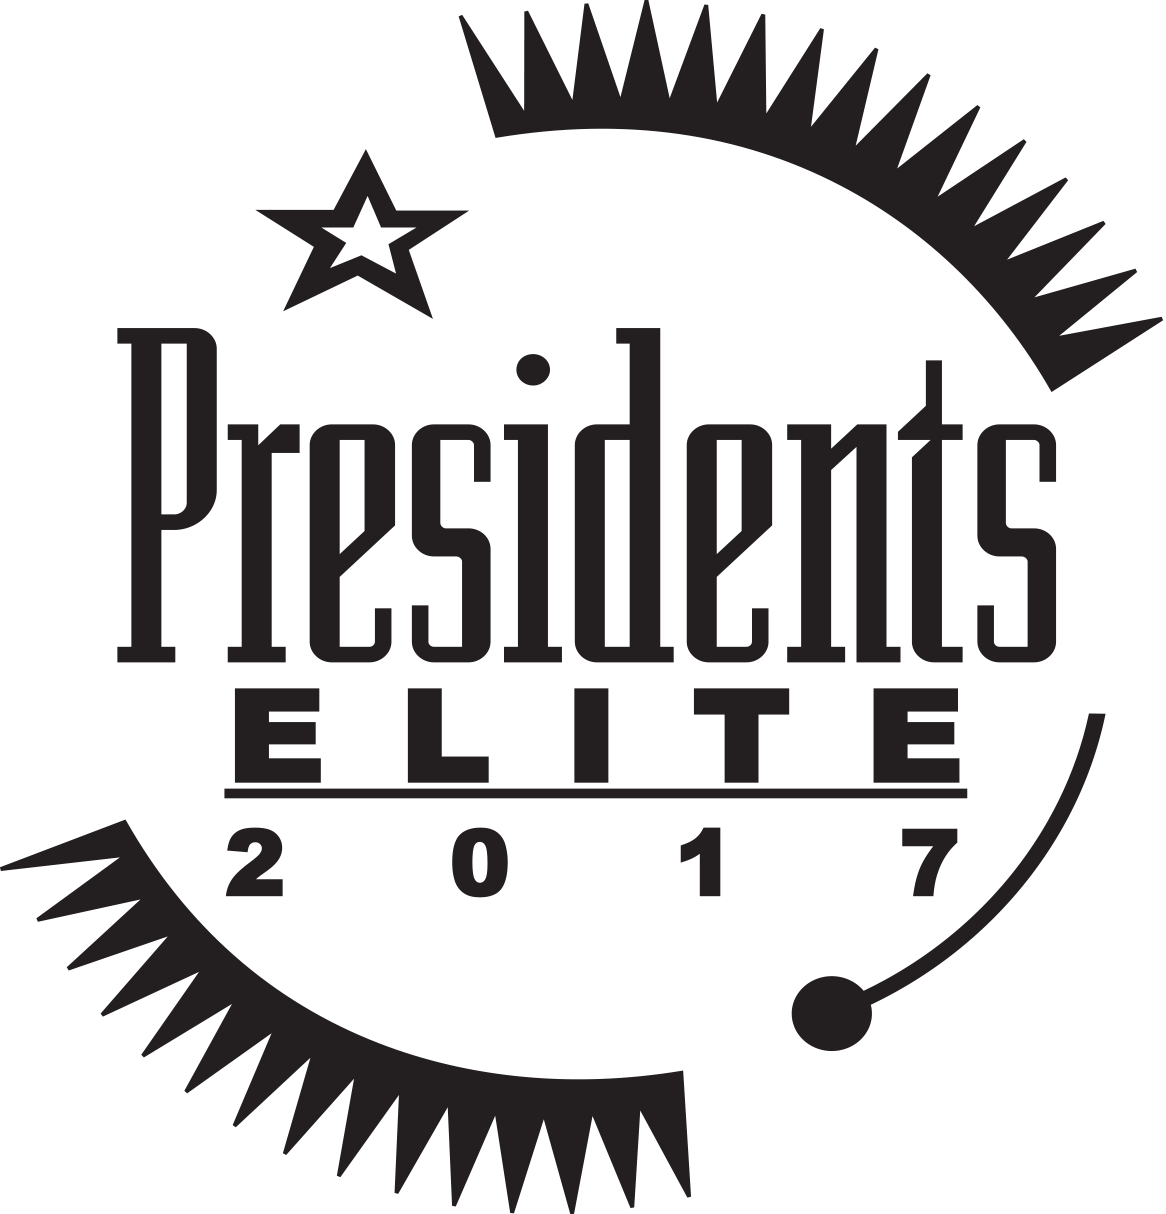 2017 Presidents Elite Award